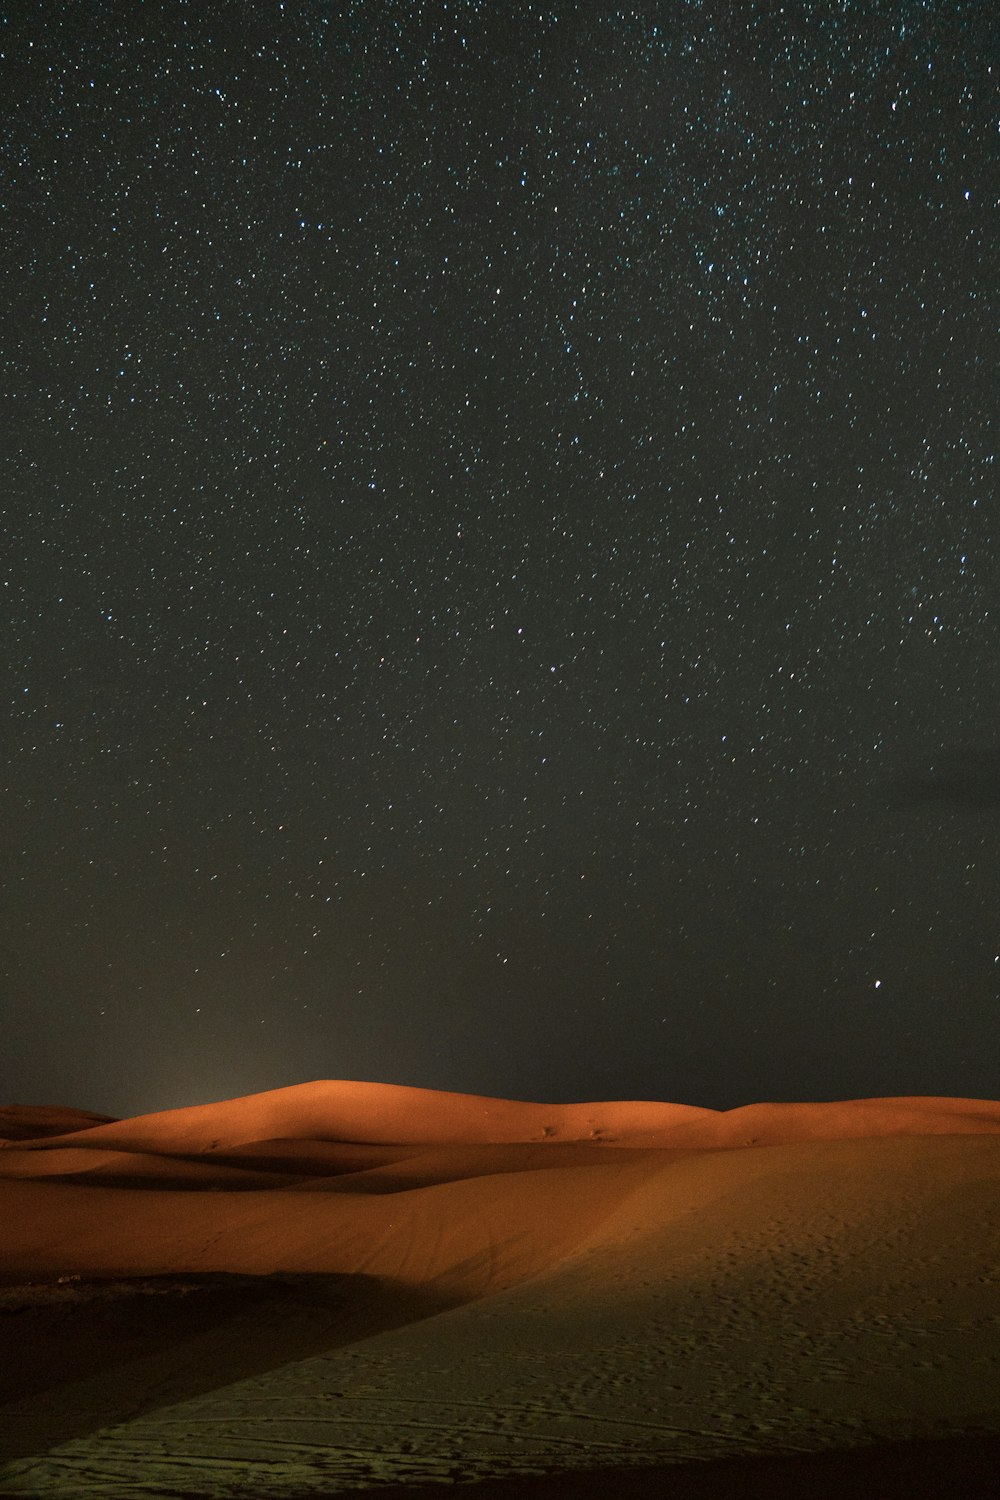 stars across the sky view at the desert